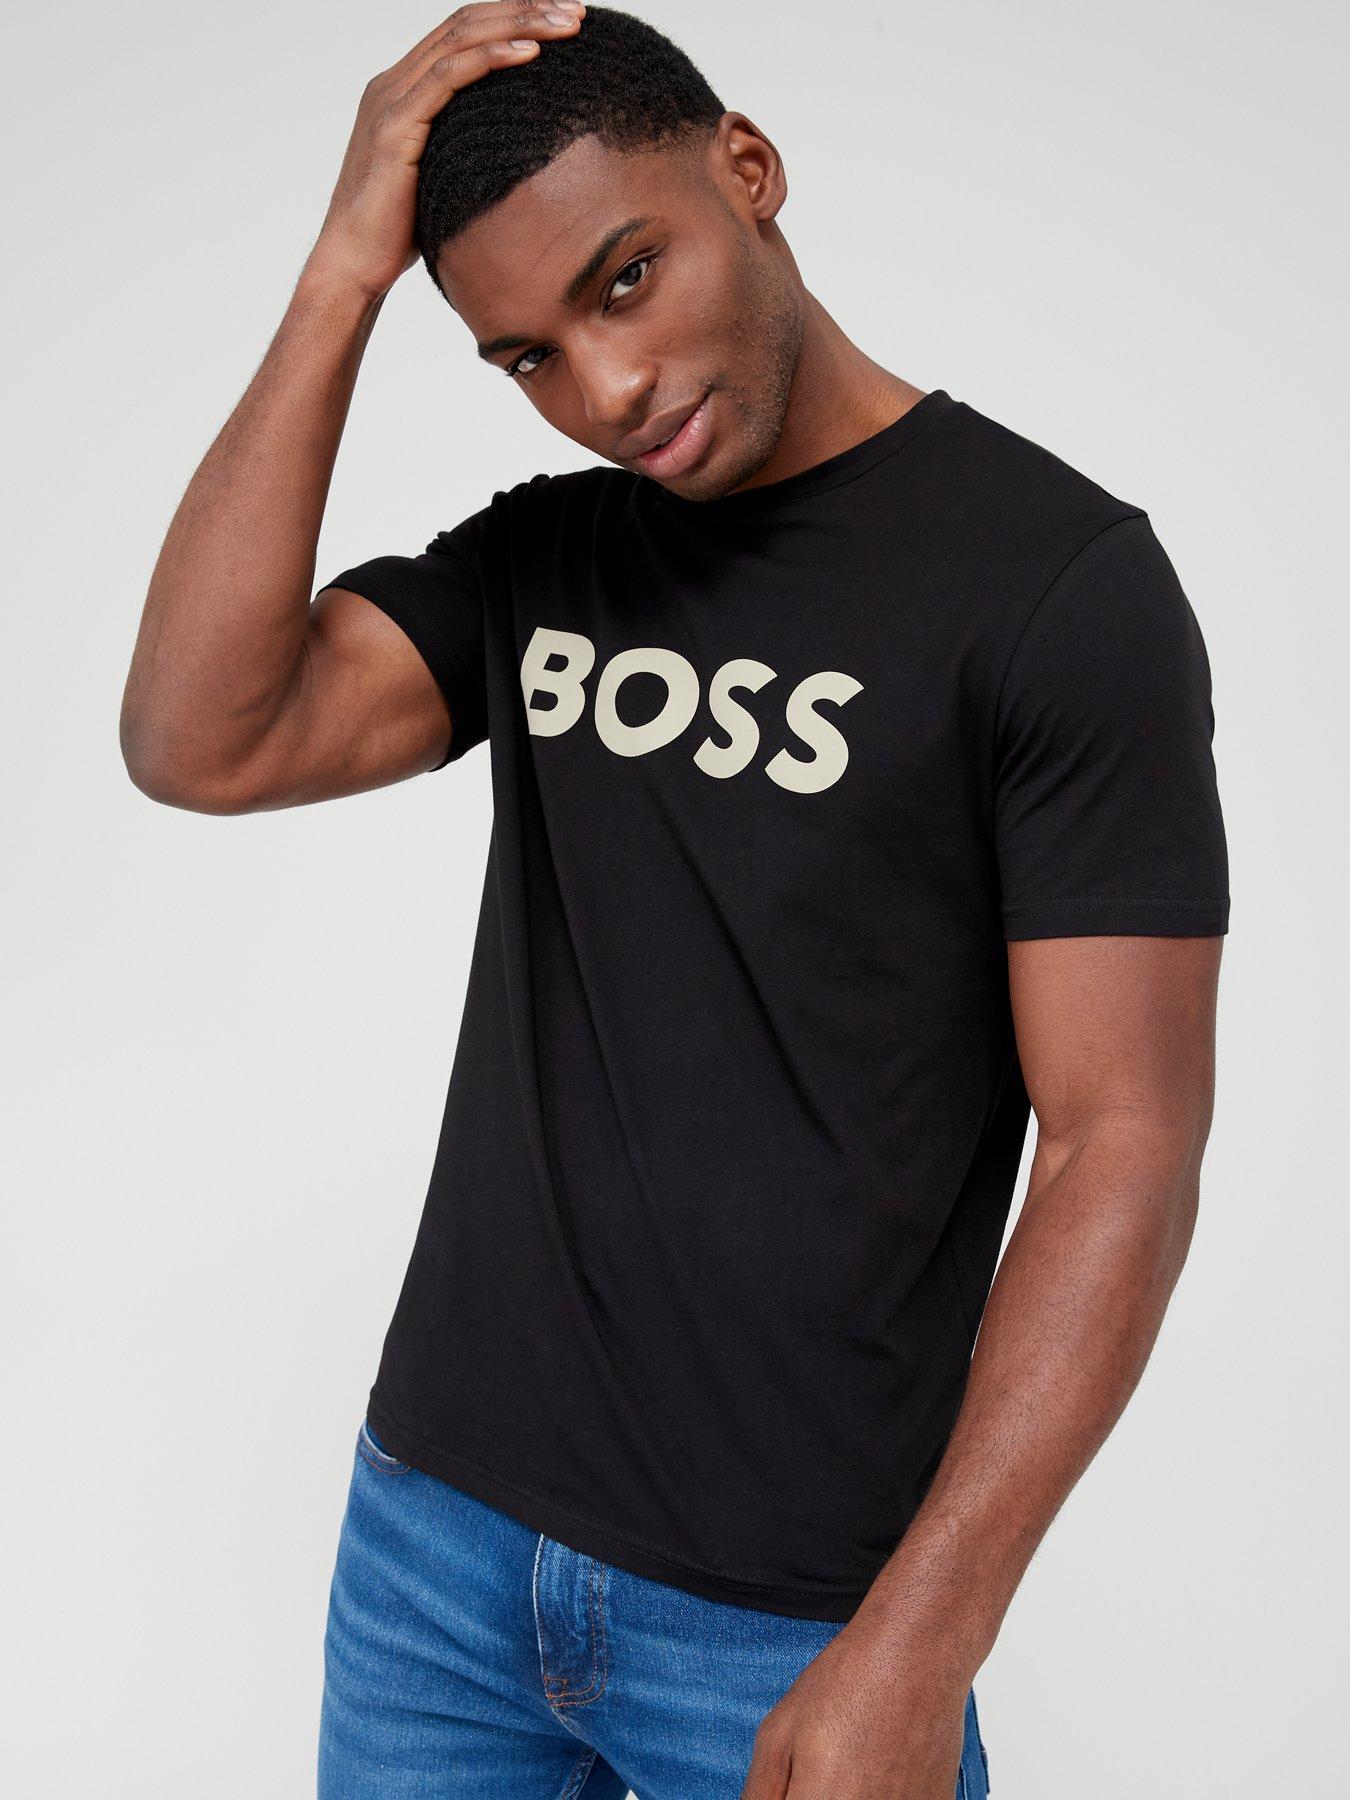 T-Shirts Hugo Boss Herren XL T-Shirts HUGO BOSS 4 braun Herren Kleidung Hugo Boss Herren T-Shirts & Polos Hugo Boss Herren T-Shirts Hugo Boss Herren 